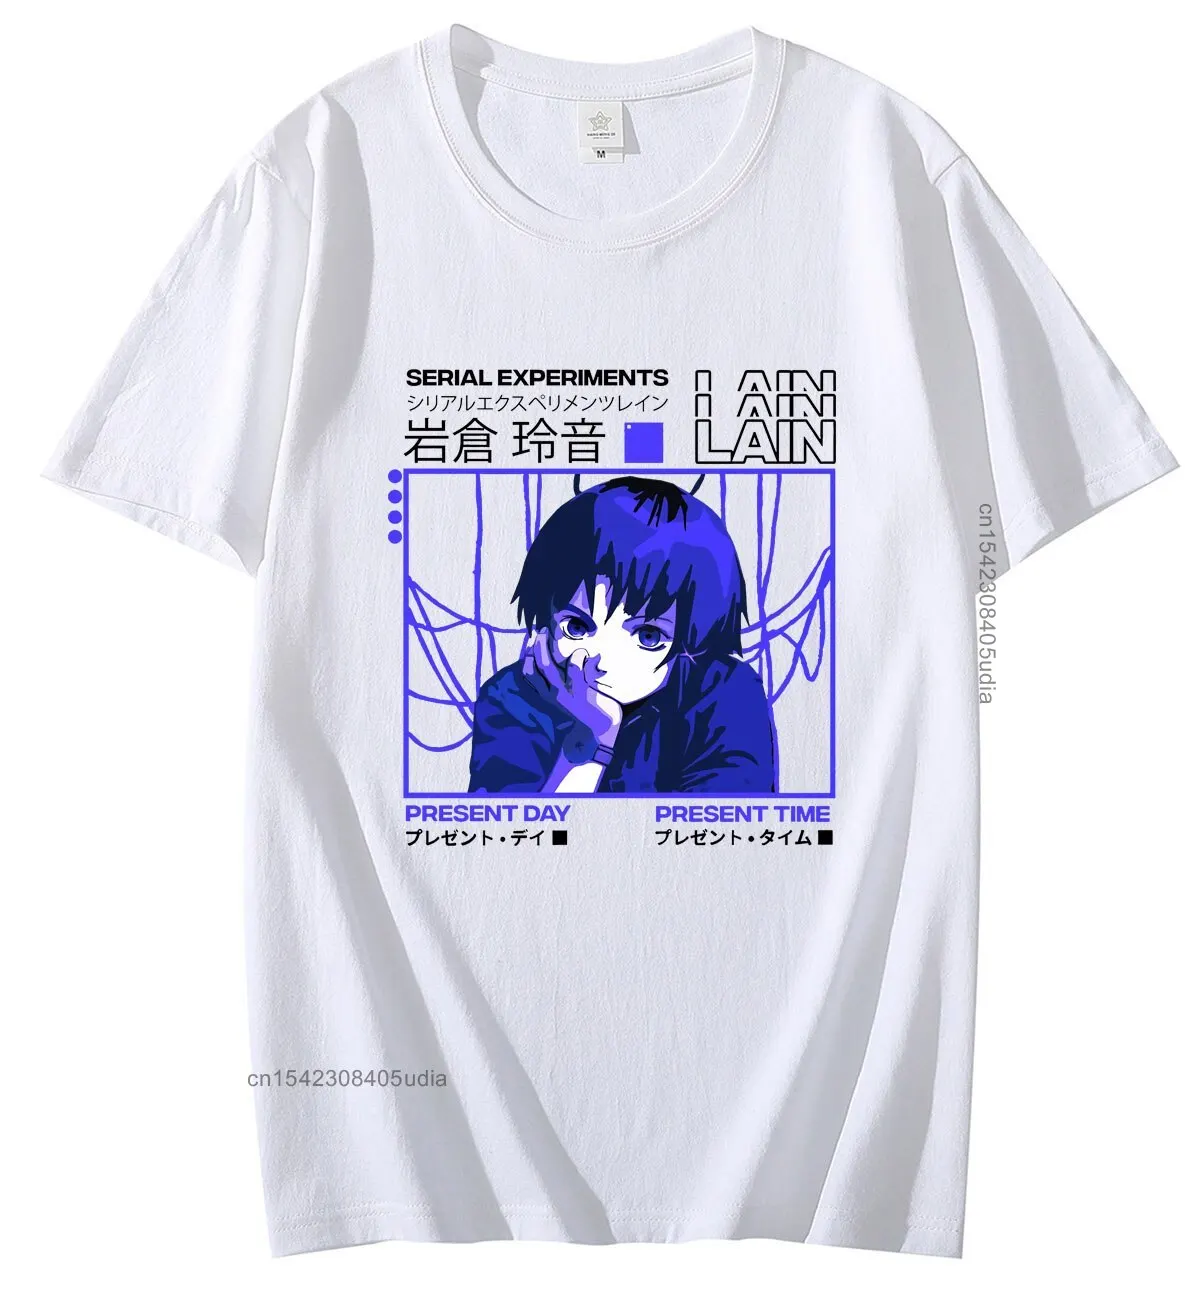 Serial Experiments Lain Oversized T-Shirt Men Cotton T Shirt Glitch Iwakura Manga Weeb Girl Sci Fi Anime Short Sleeve Tee Tops